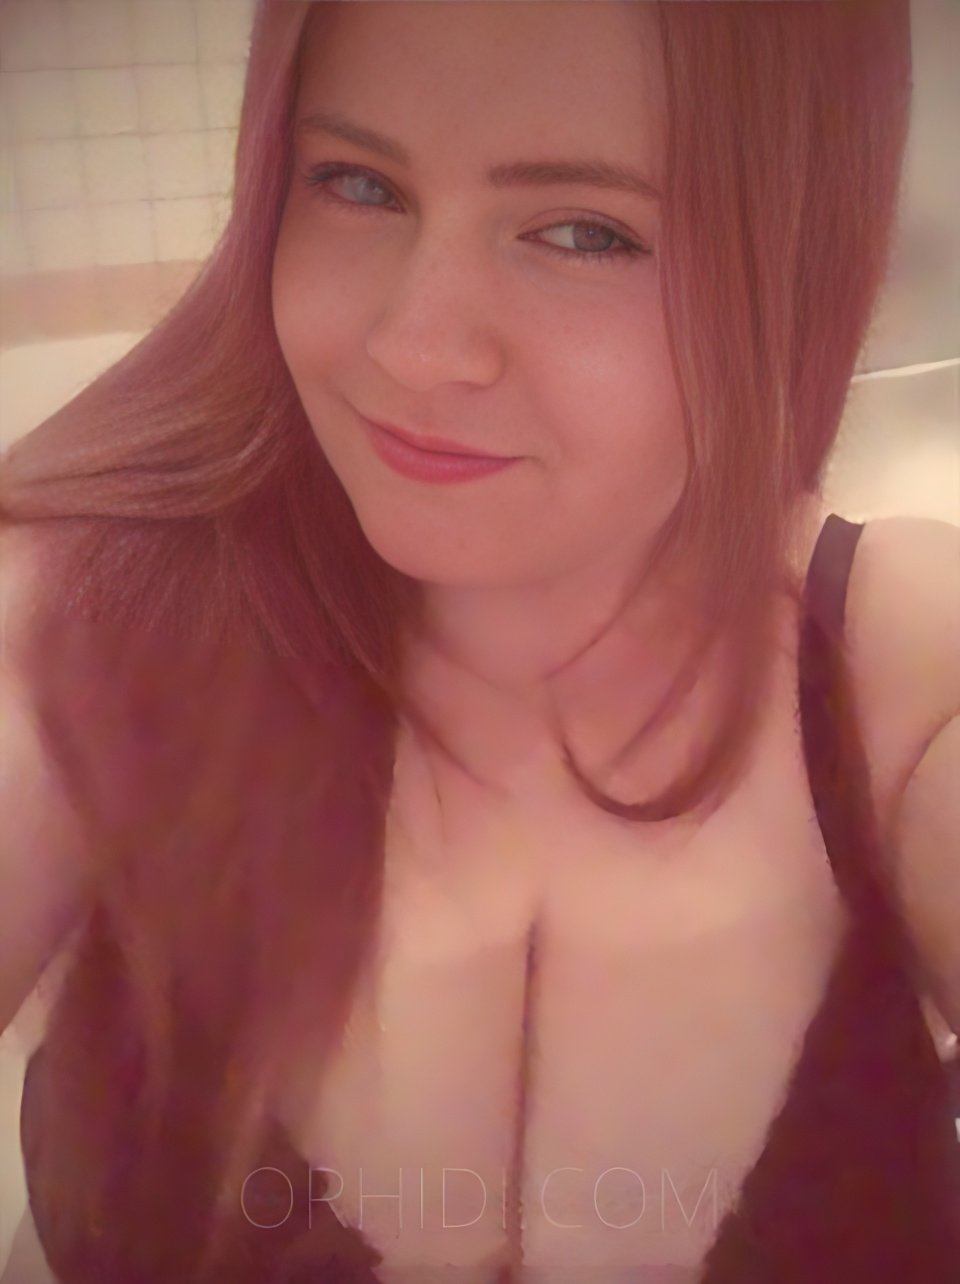 Meet Amazing Sanfte Melly (30) - Erholsame Lust: Top Escort Girl - profile photo 2